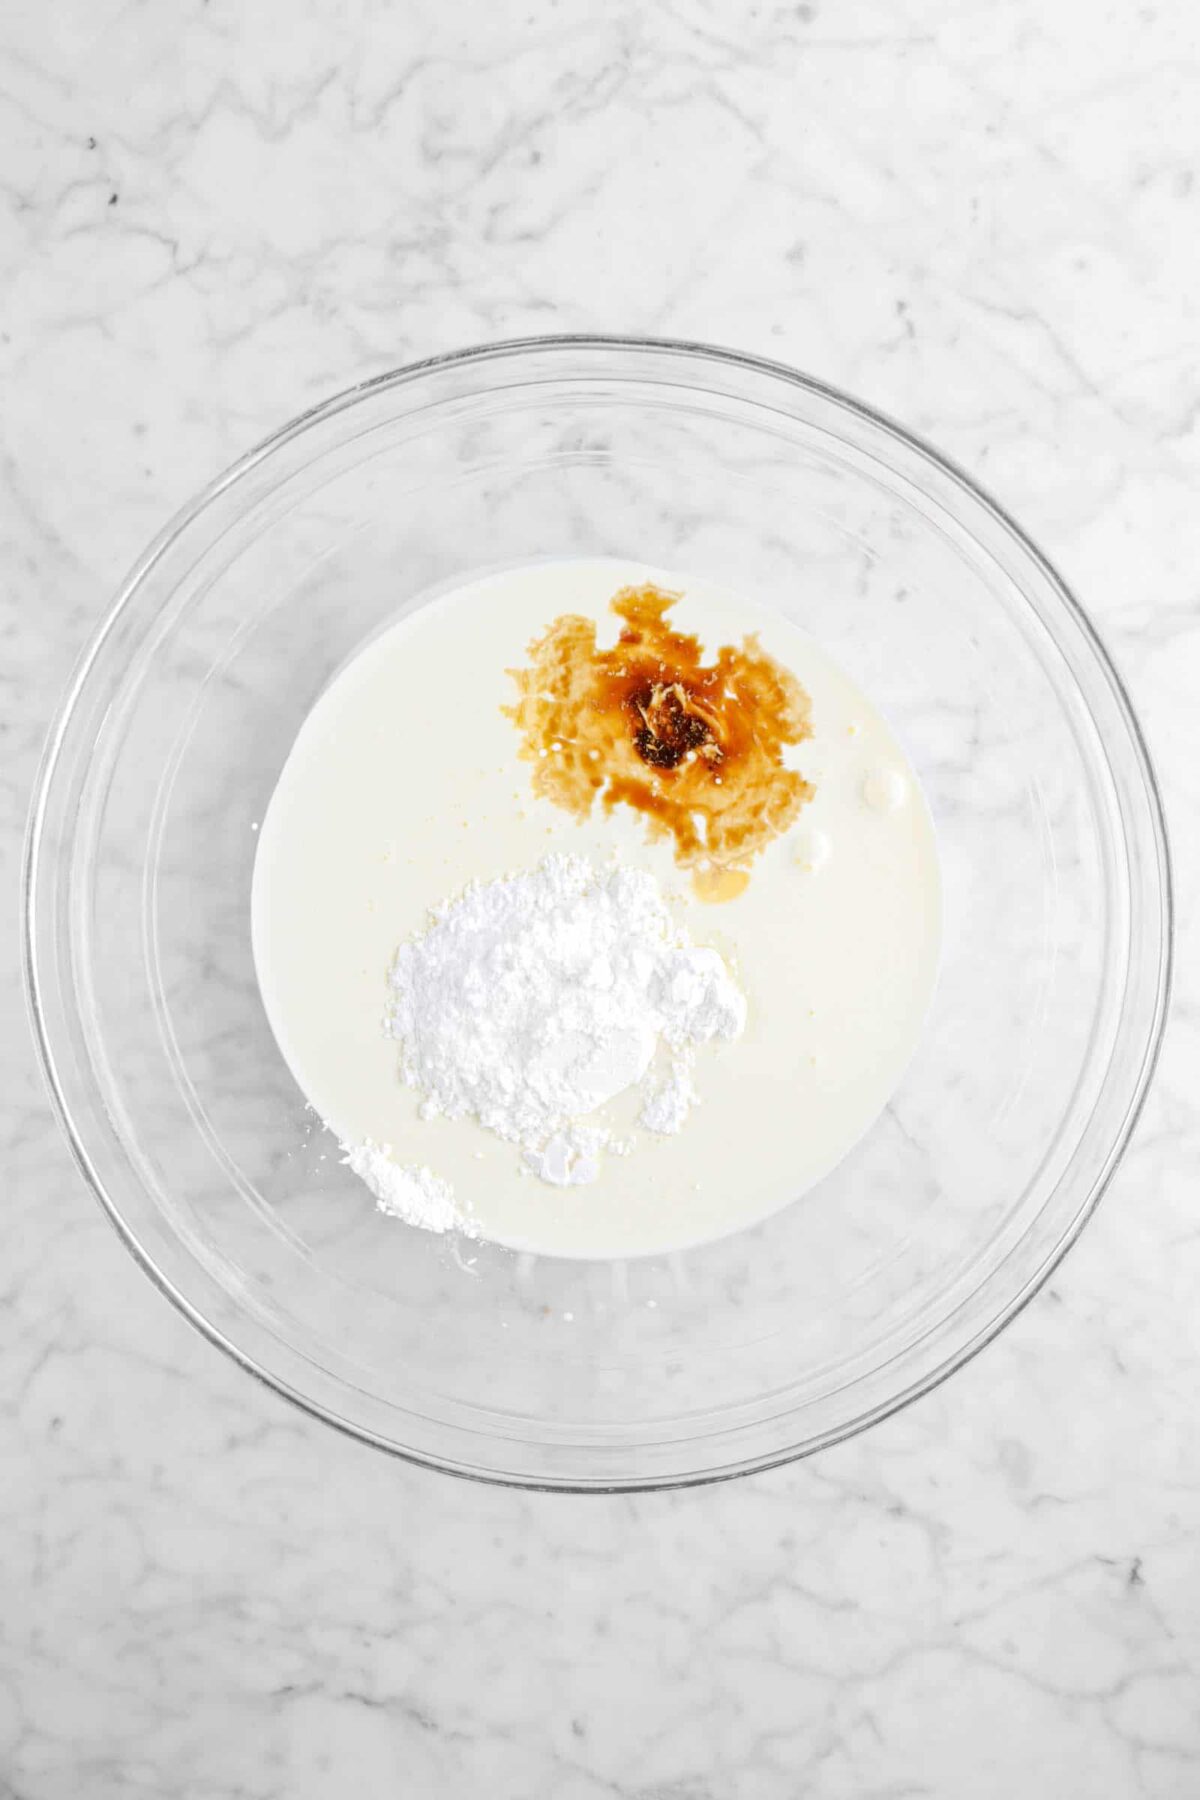 vanilla, heavy cream, and powdered sugar in glass bowl